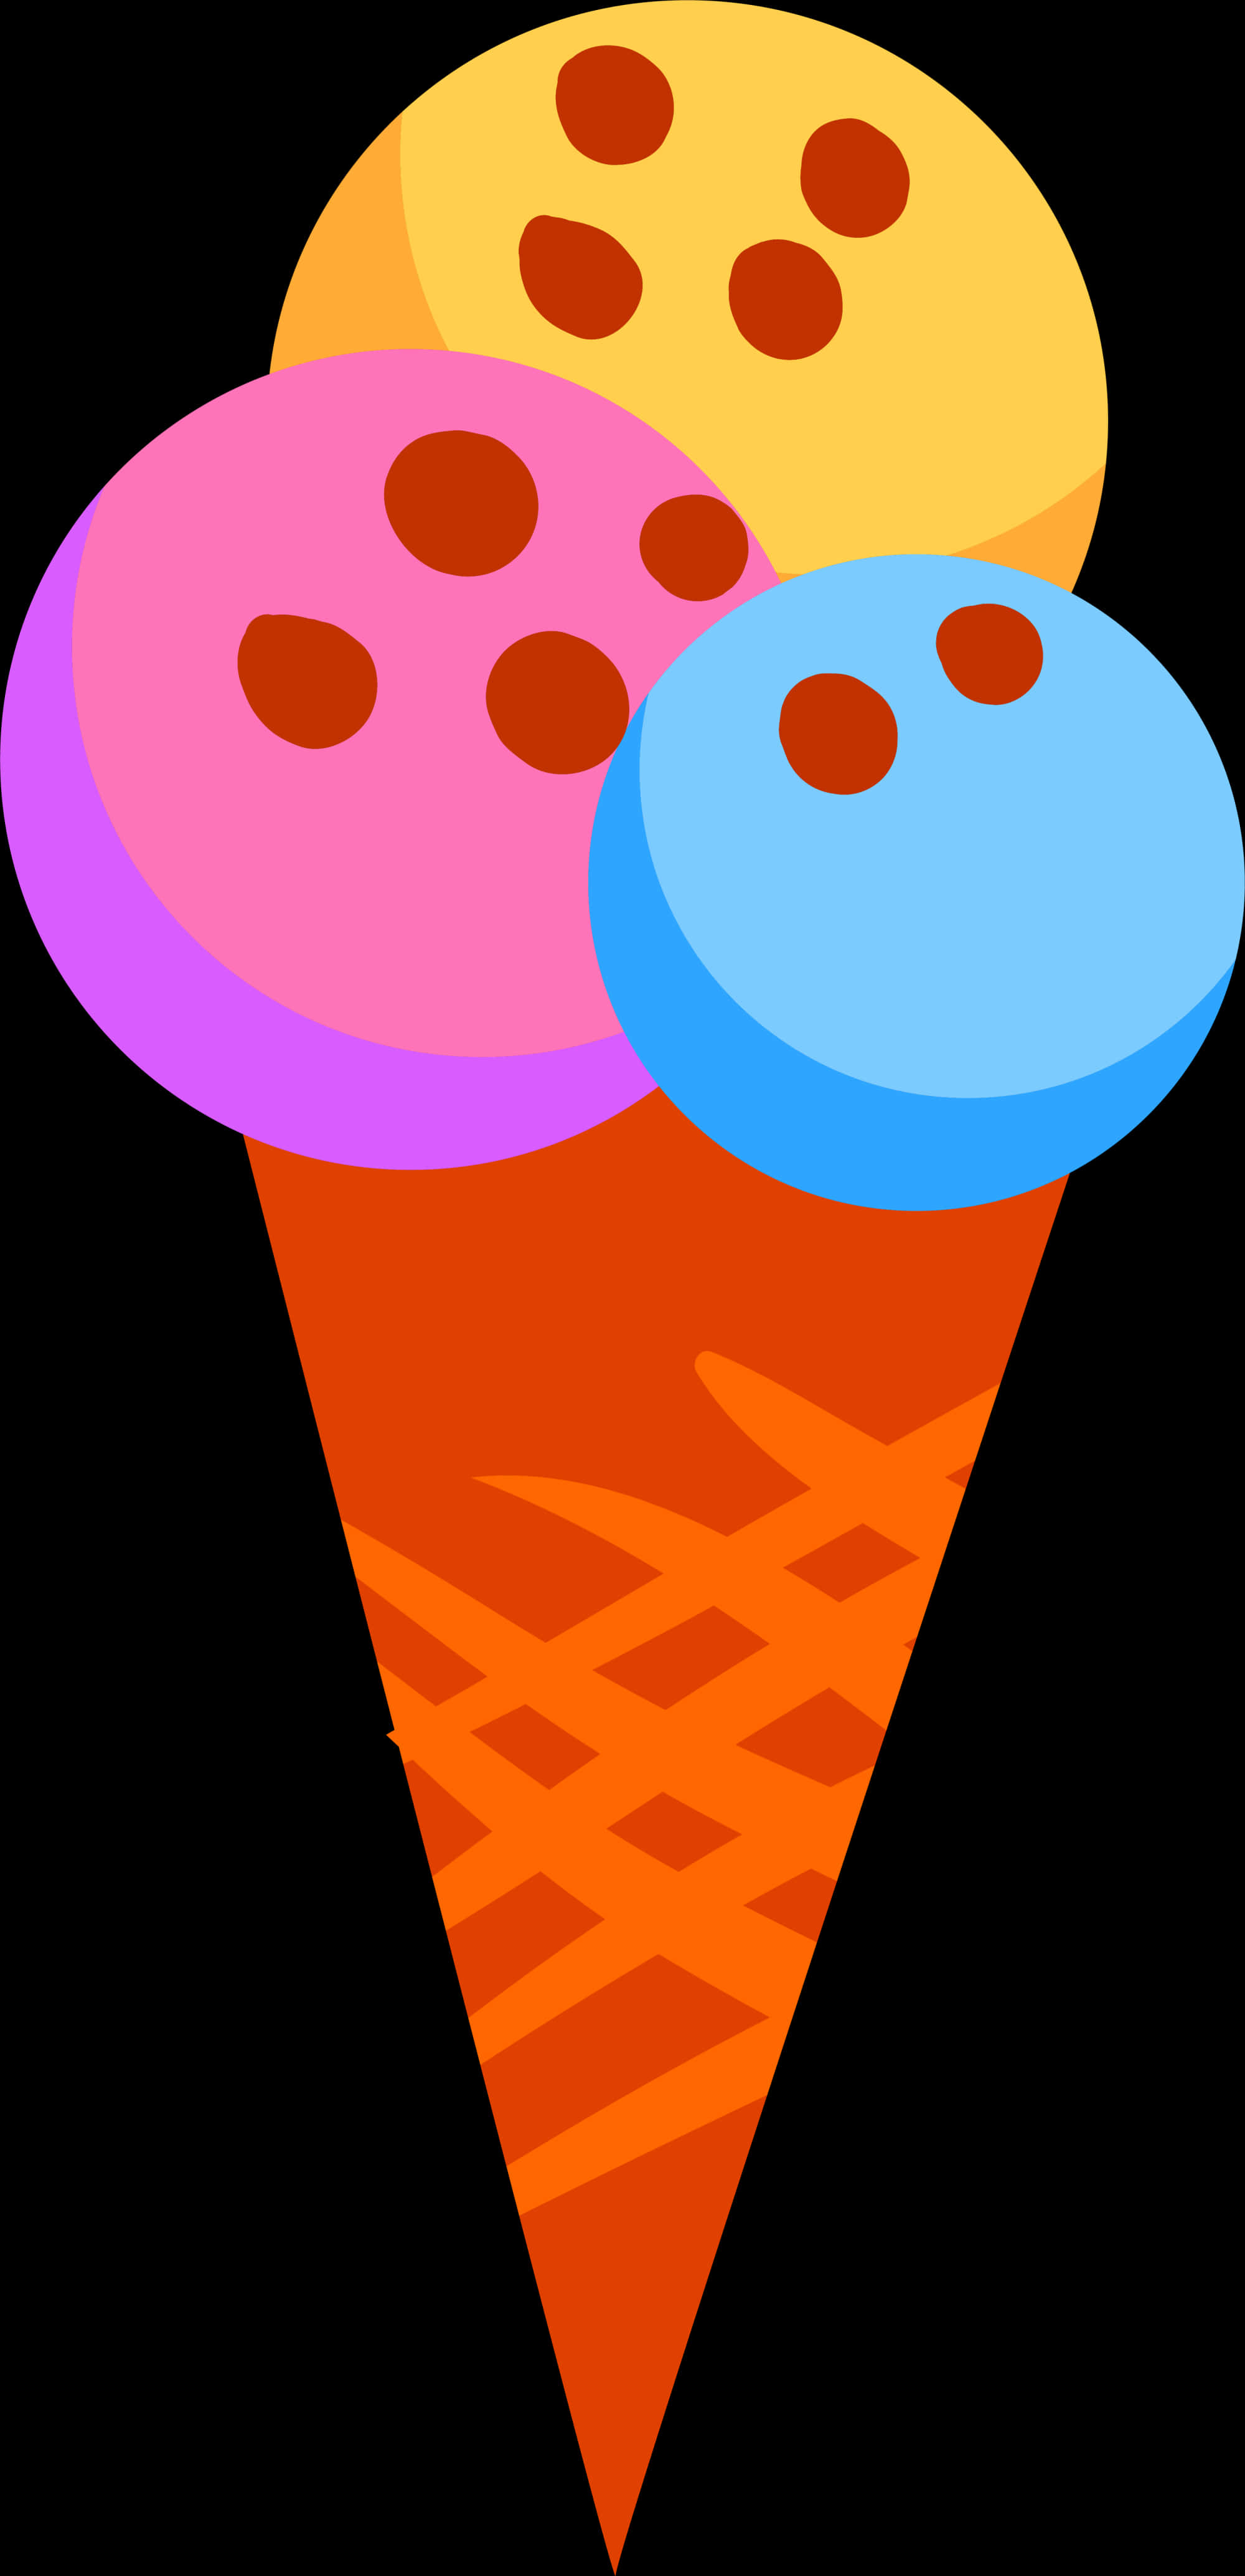 A Colorful Ice Cream Cone With Balls